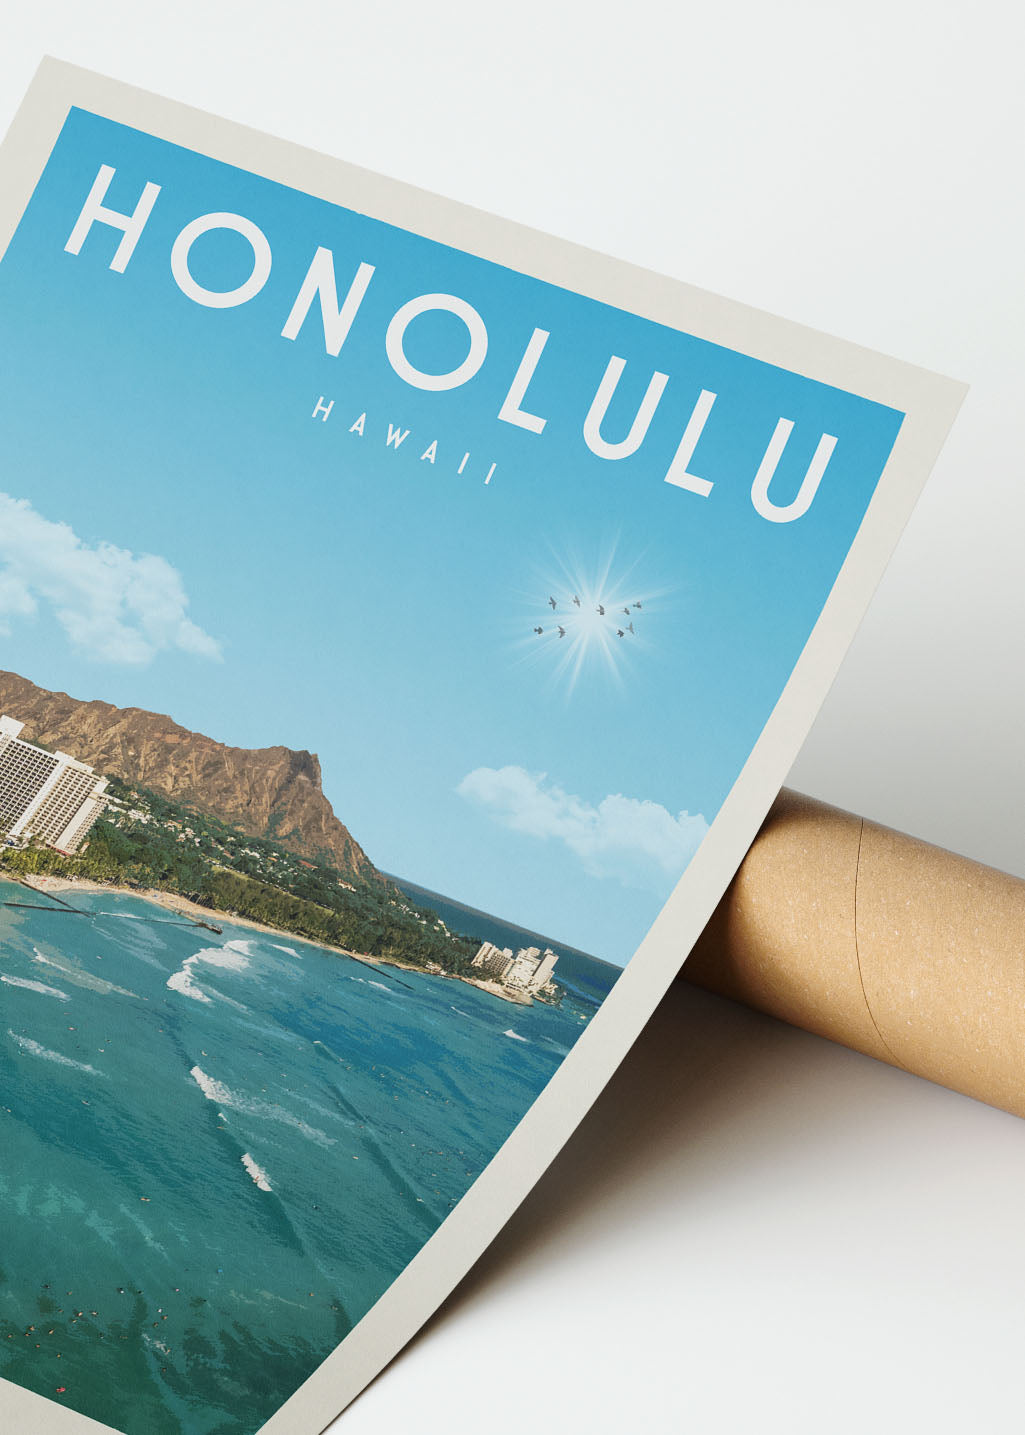 Honolulu, Hawaii - Vintage Travel Print - Vintaprints